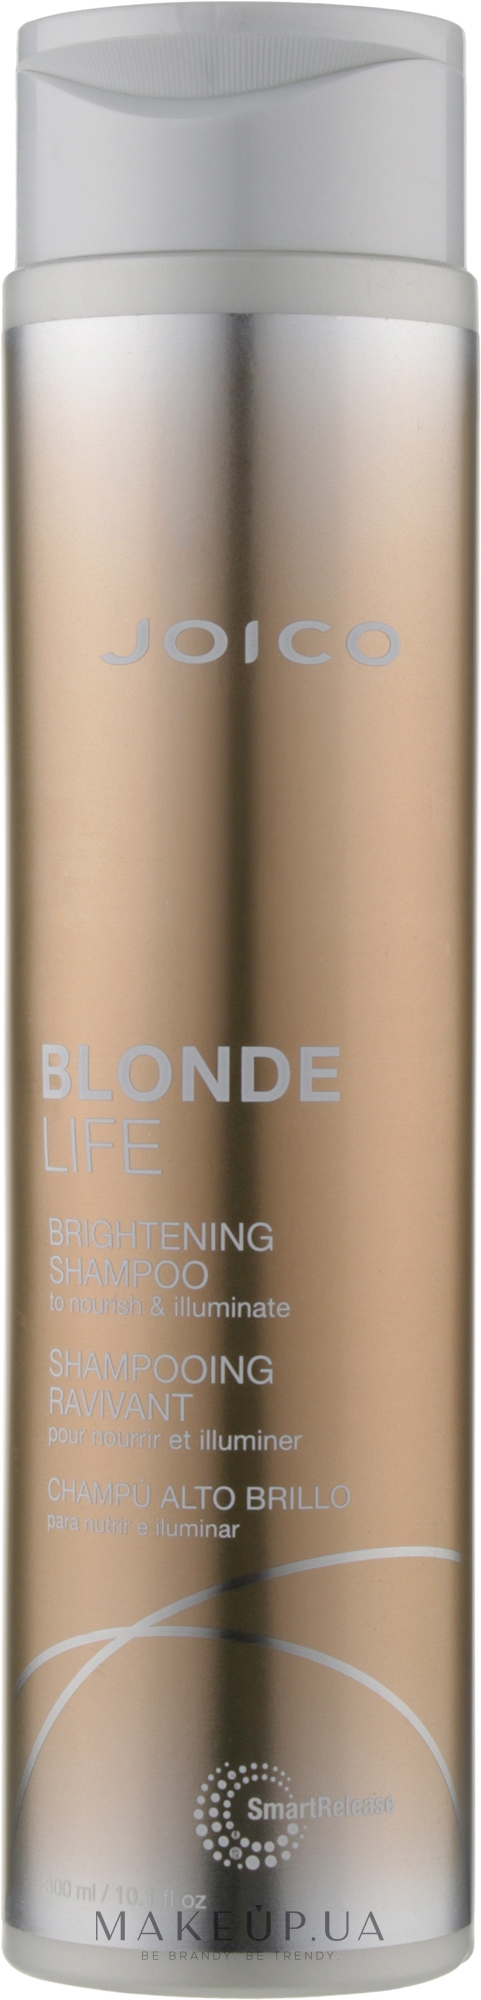 Шампунь для збереження яскравості блонда - SR Blonde Life/Blonde Life Brightening Shampoo — фото 300ml